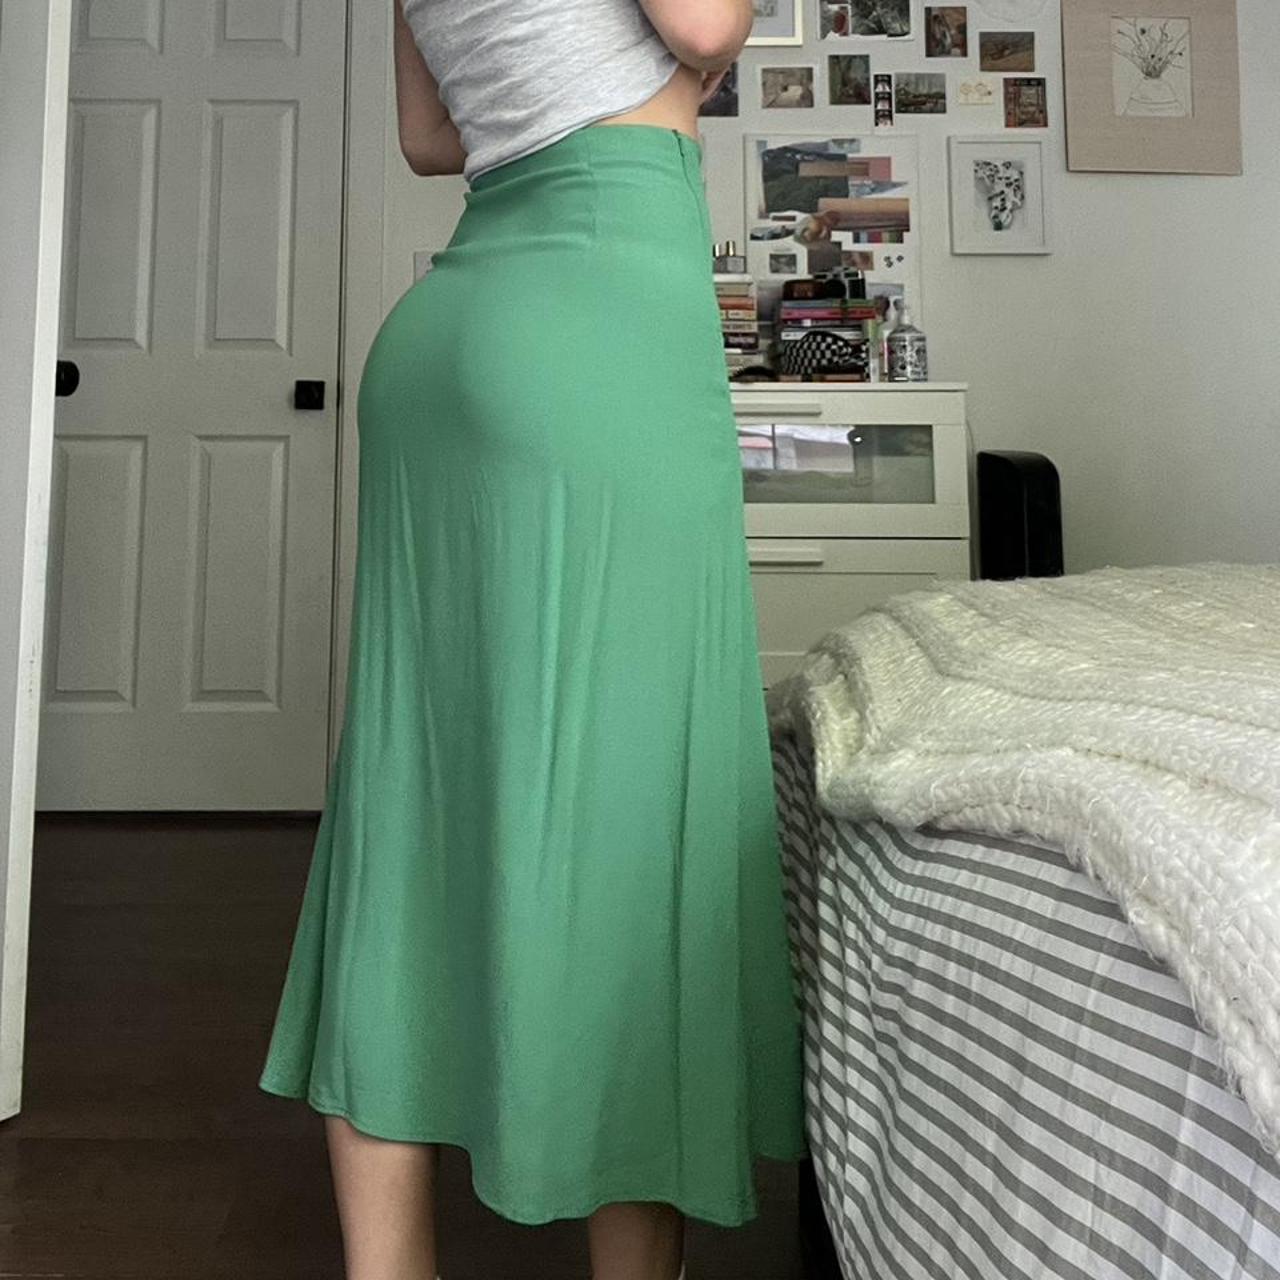 New Look Women's Green Skirt (2)